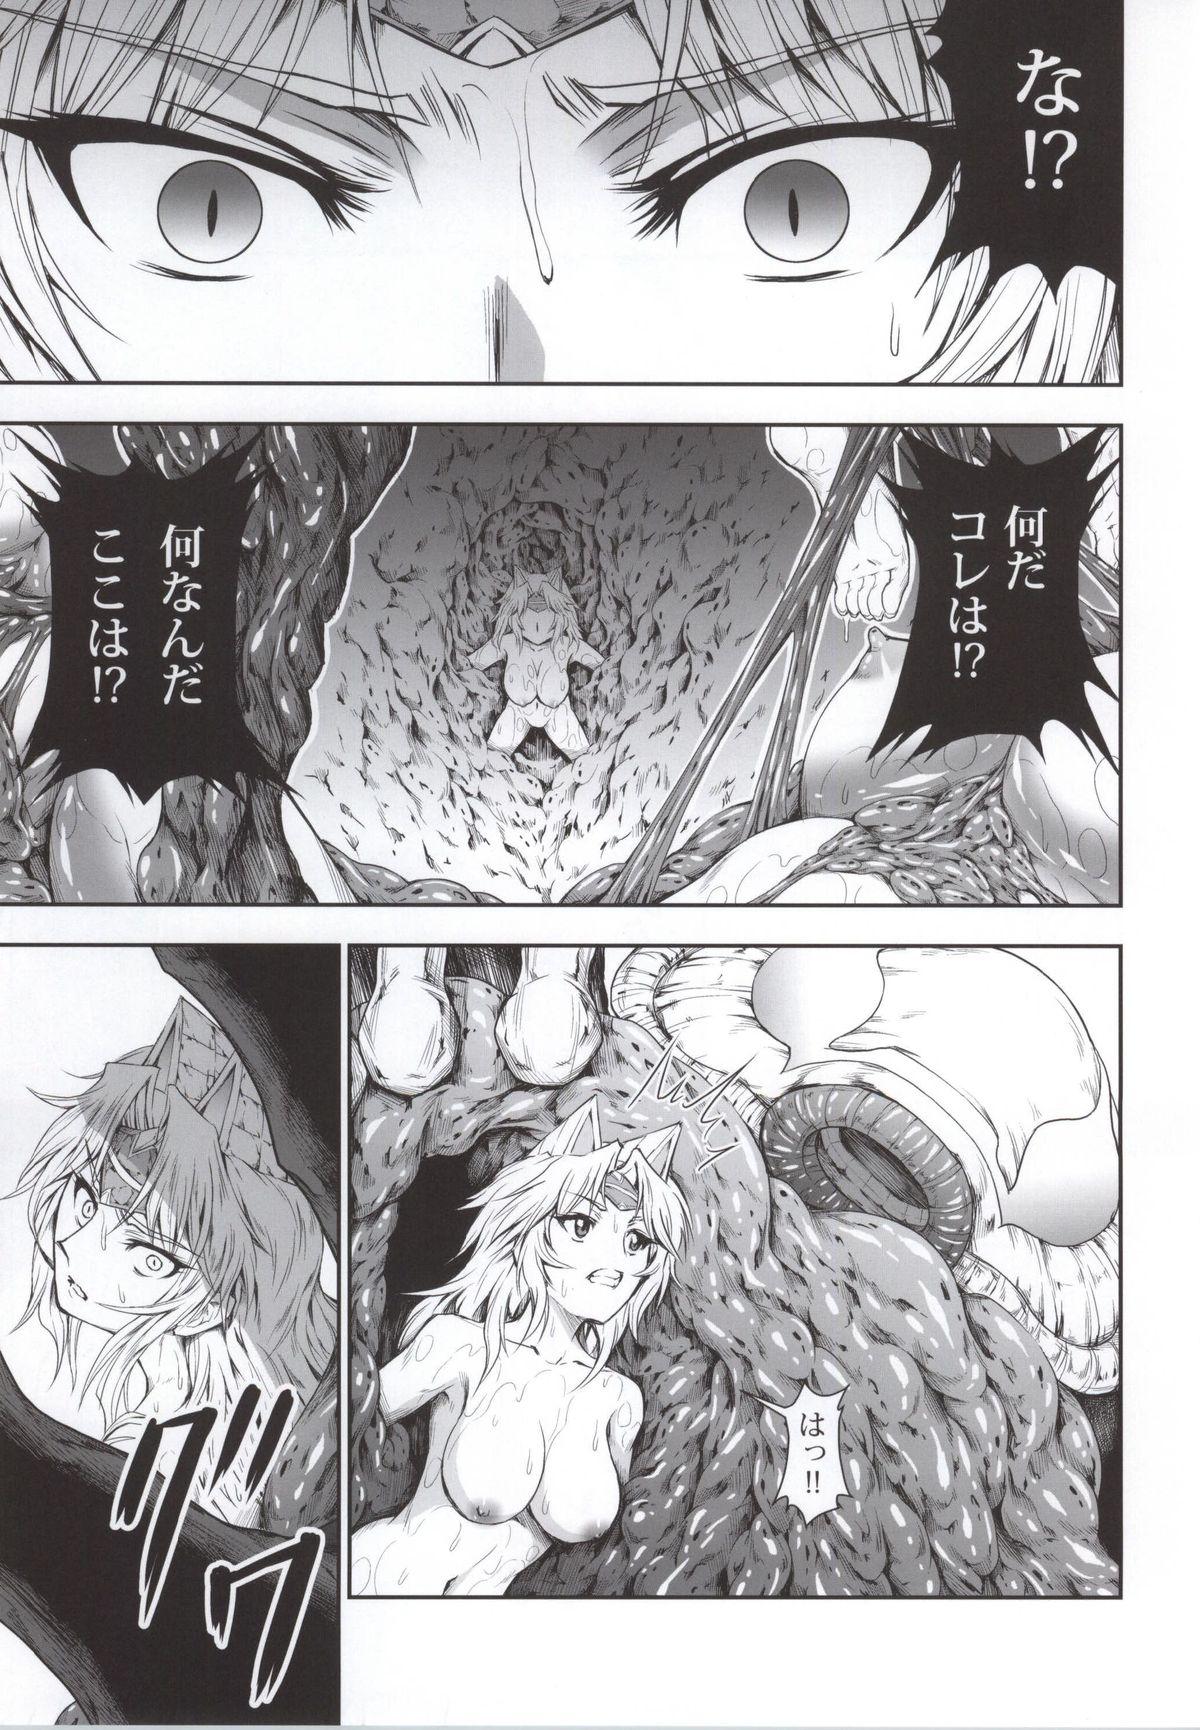 Puto Solo Hunter no Seitai 4 The third part - Monster hunter Friends - Page 9